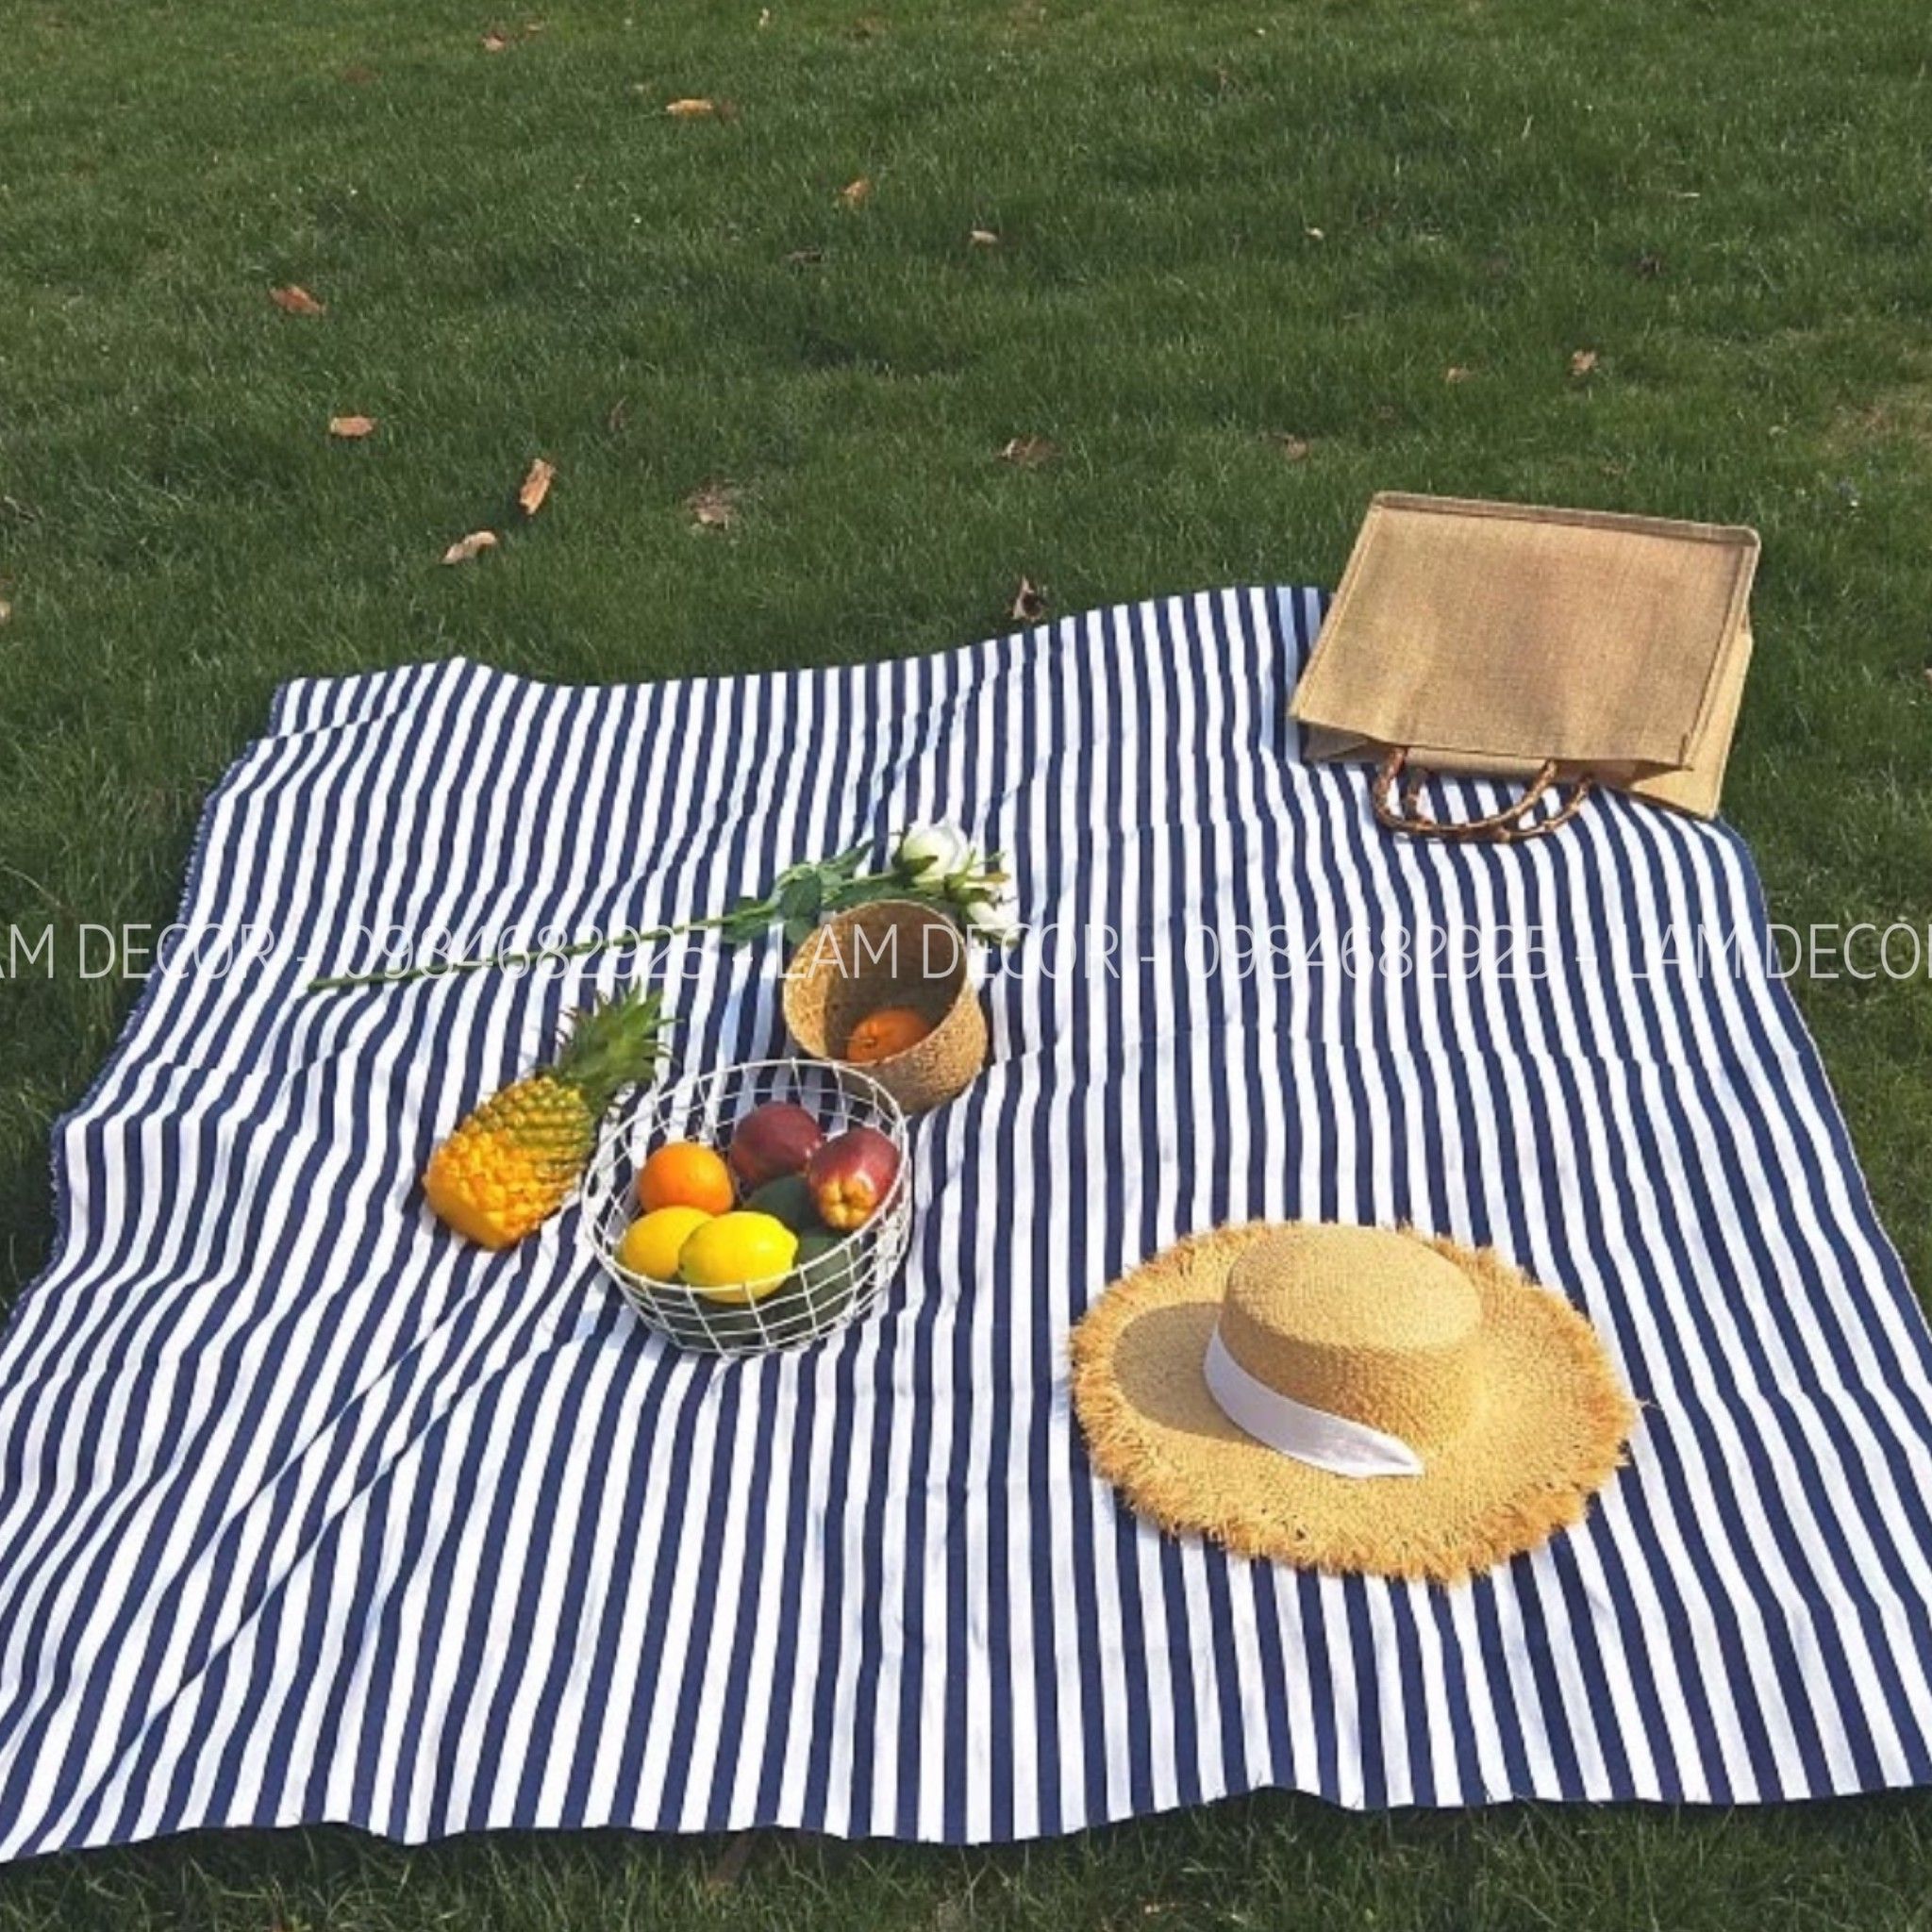  BST thảm trải picnic bằng vải canvas 